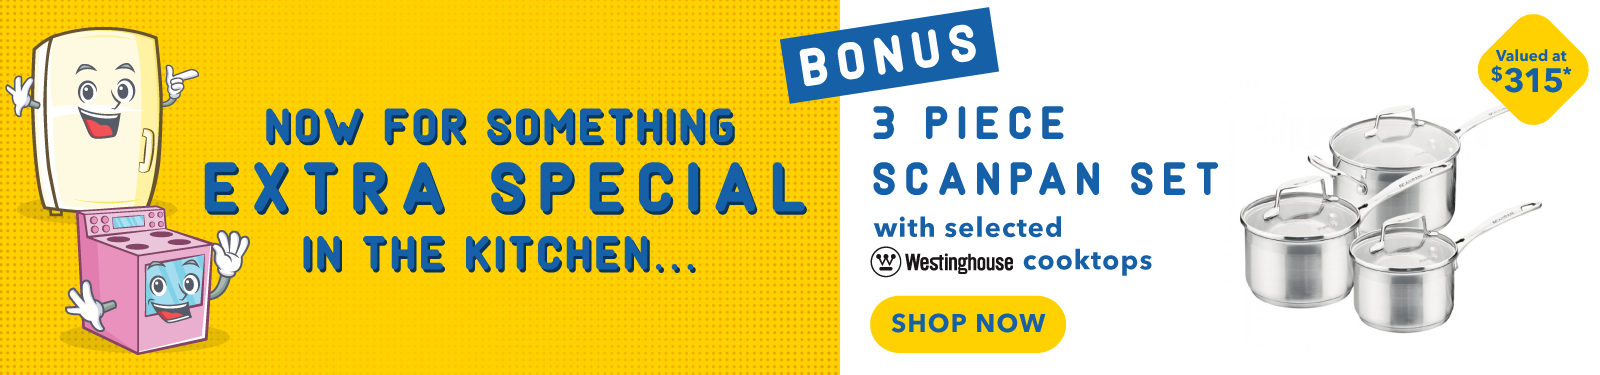 Electrolux & Westinghouse Kitchen Bonus Sale - Bonus 3 Piece Scanpan Pot Set